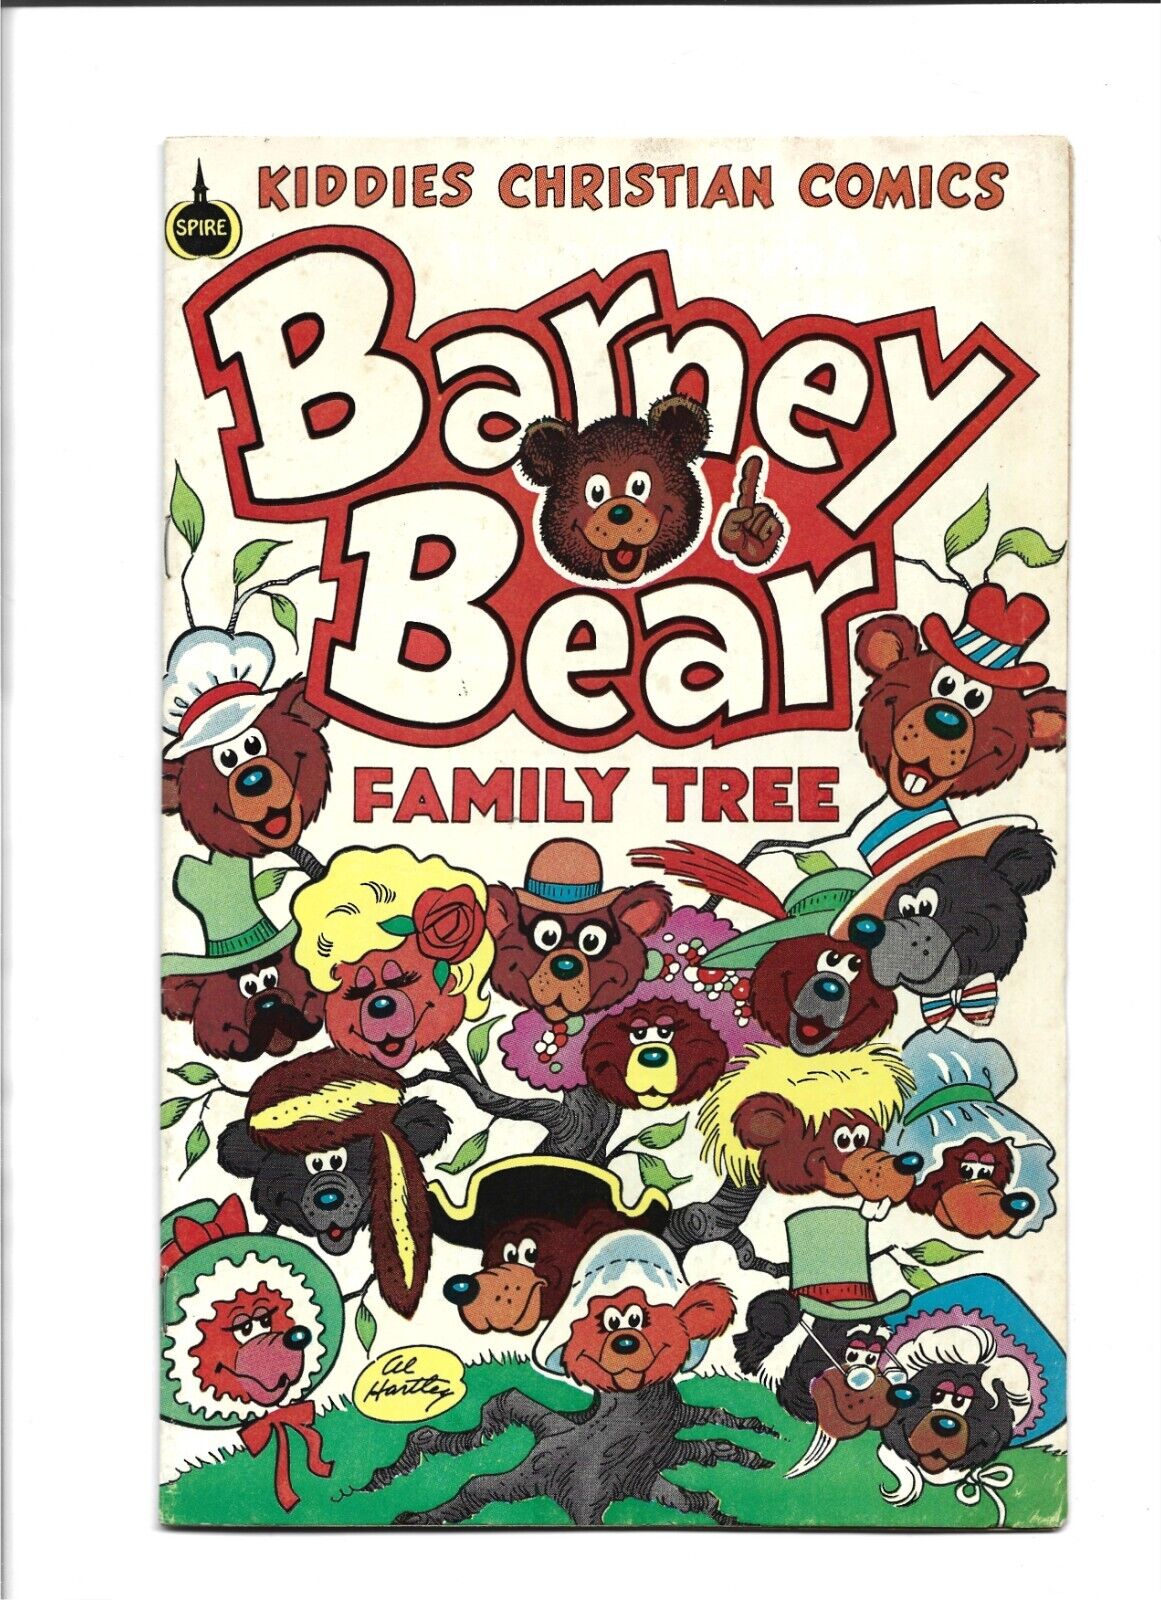 BARNEY BEAR FAMILY TREE 1982 SPIRE CHRISIAN COMICS VG/FN COMBINE SHIP